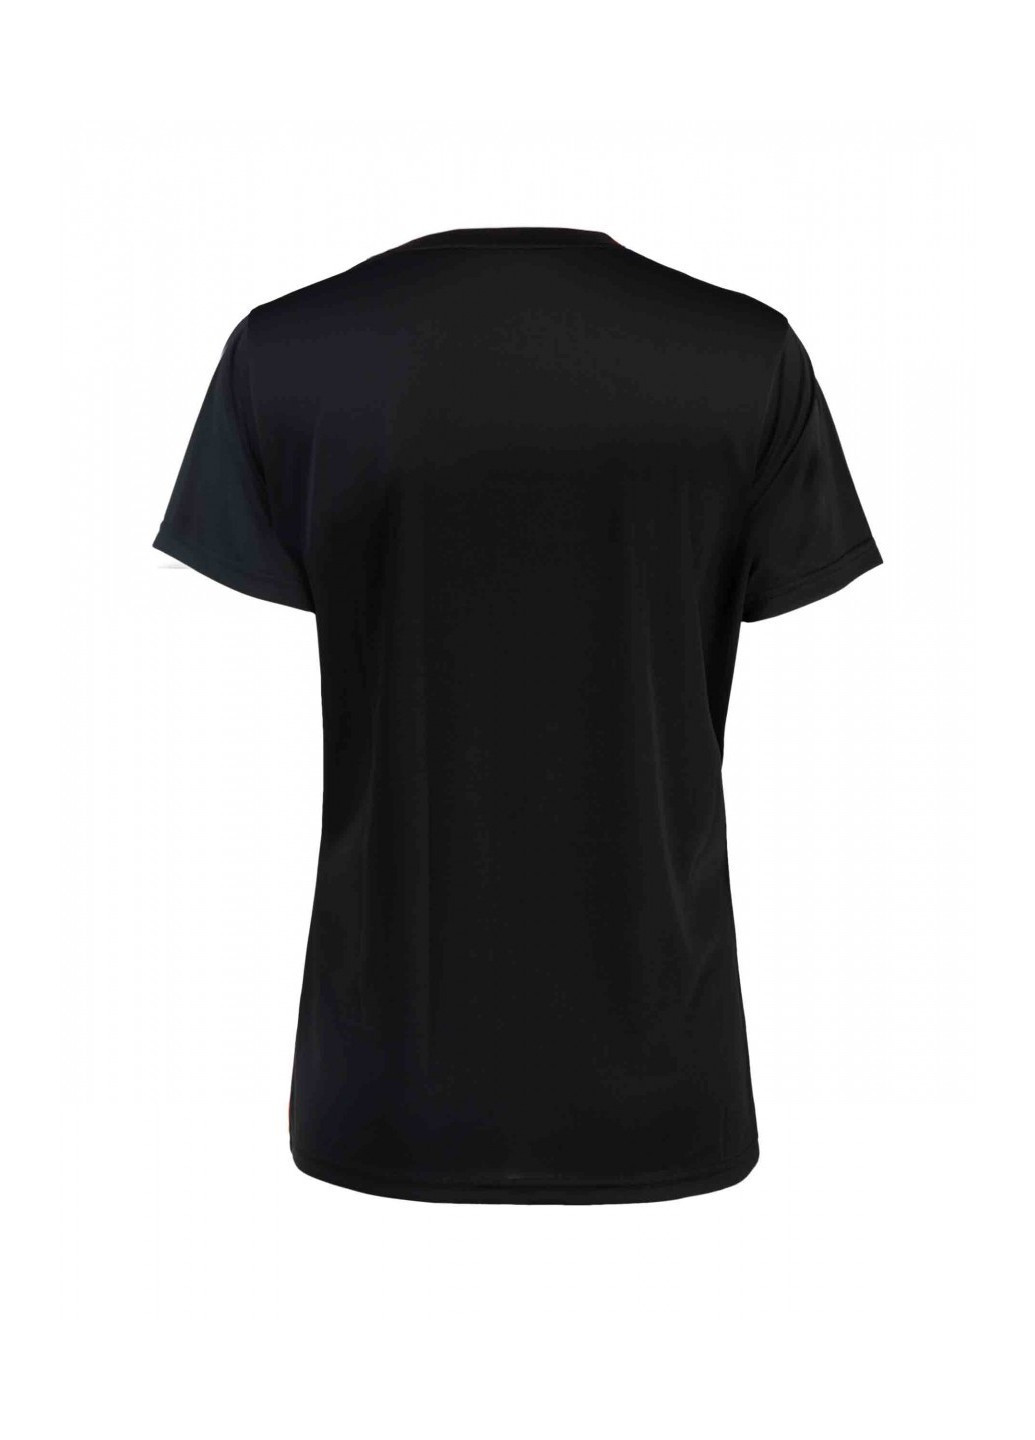 Черная летняя футболка с коротким рукавом FZ Forza